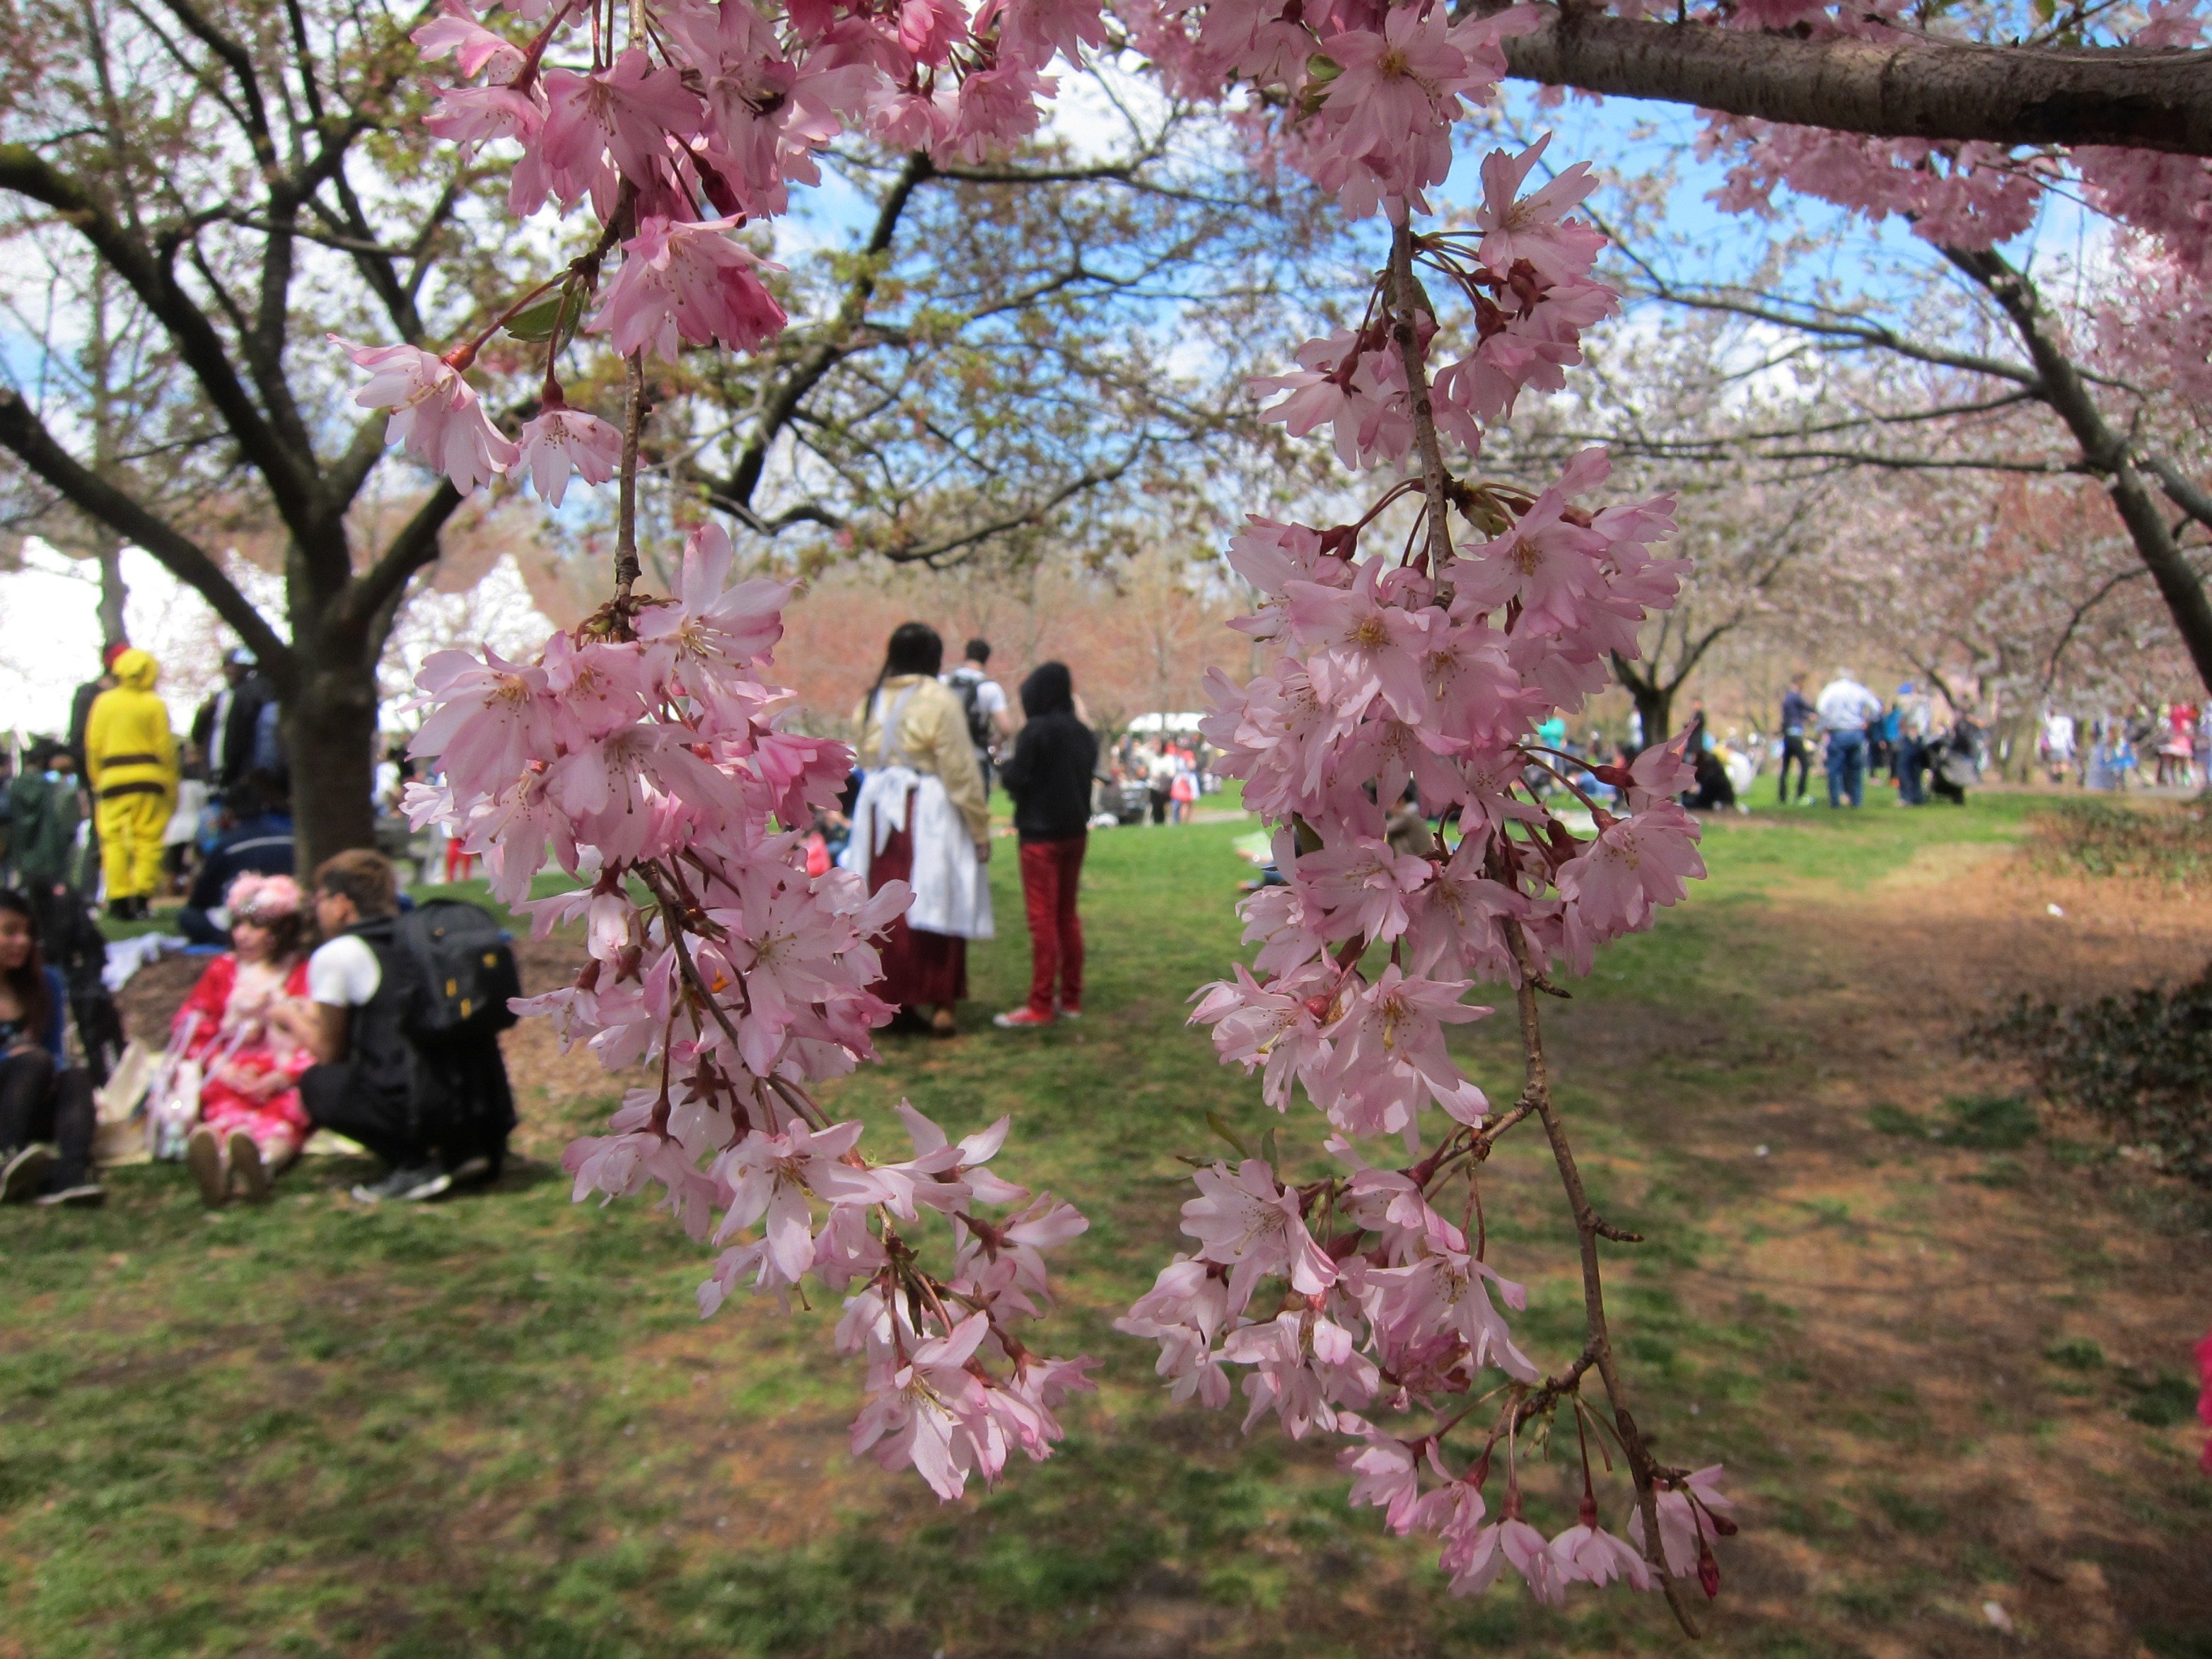 Crowd at National Cherry Blossom Festival (Sakura Matsuri